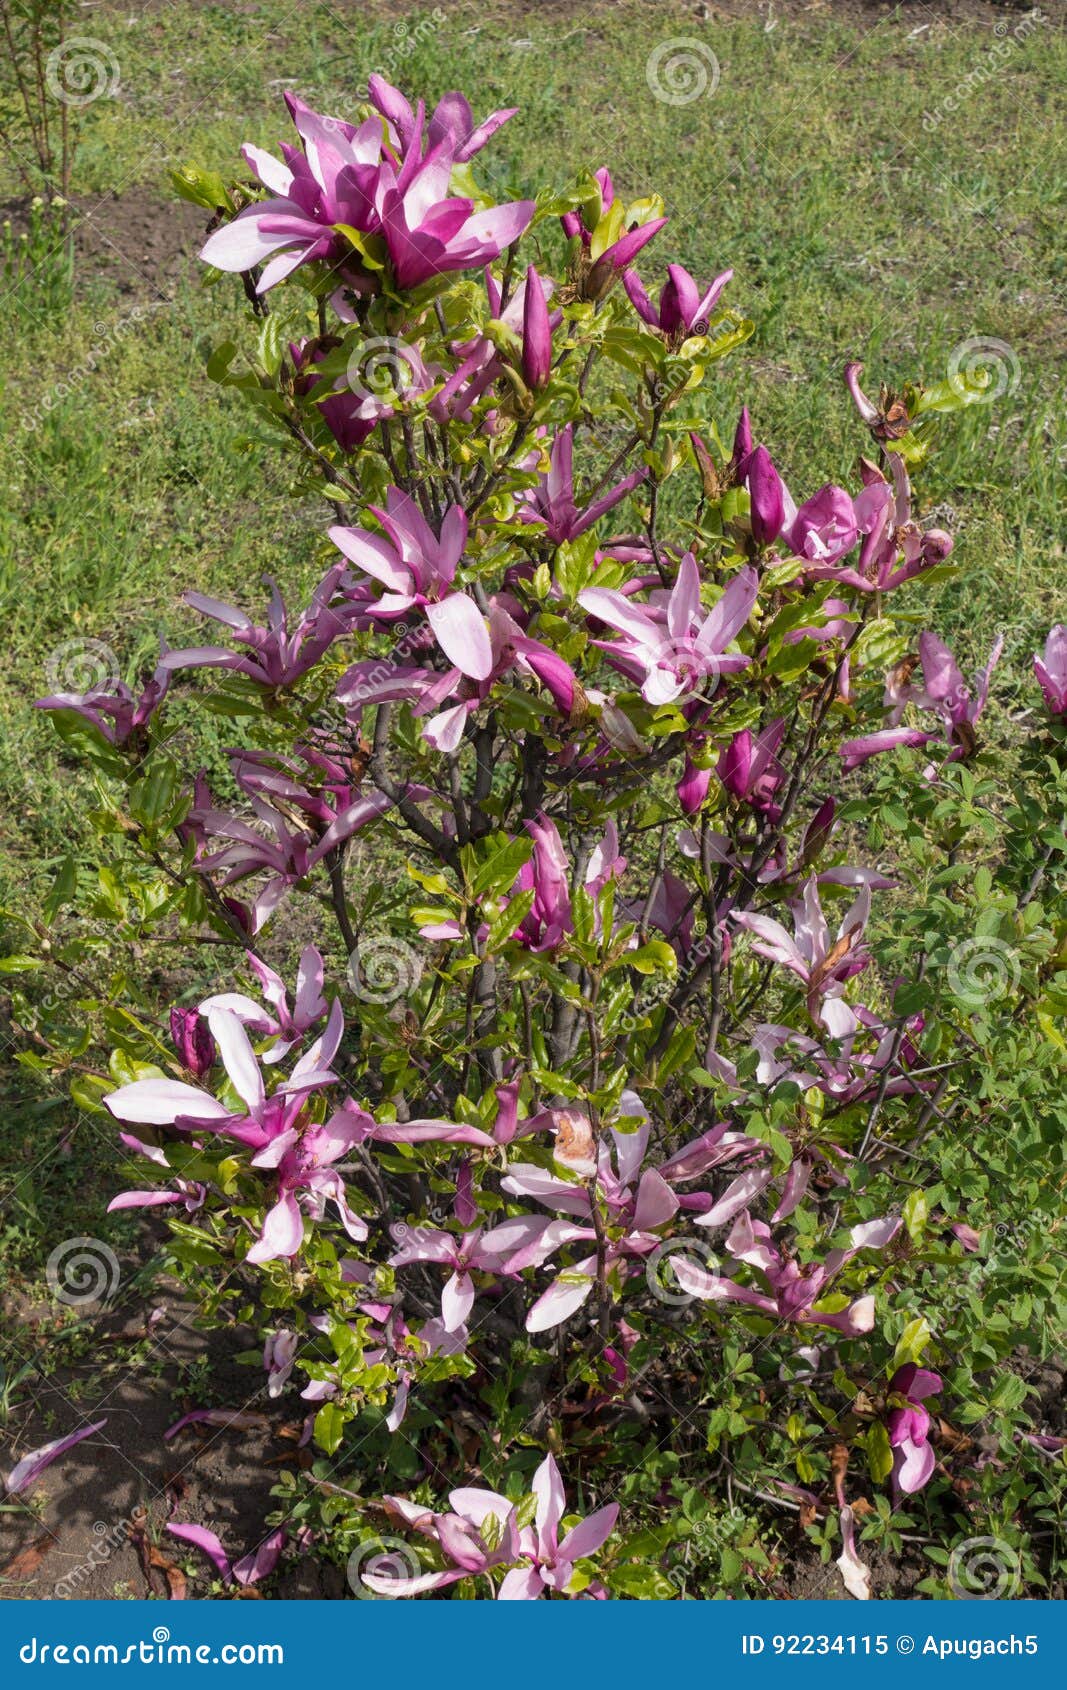 small shrub of magnolia liliiflora in full bloom